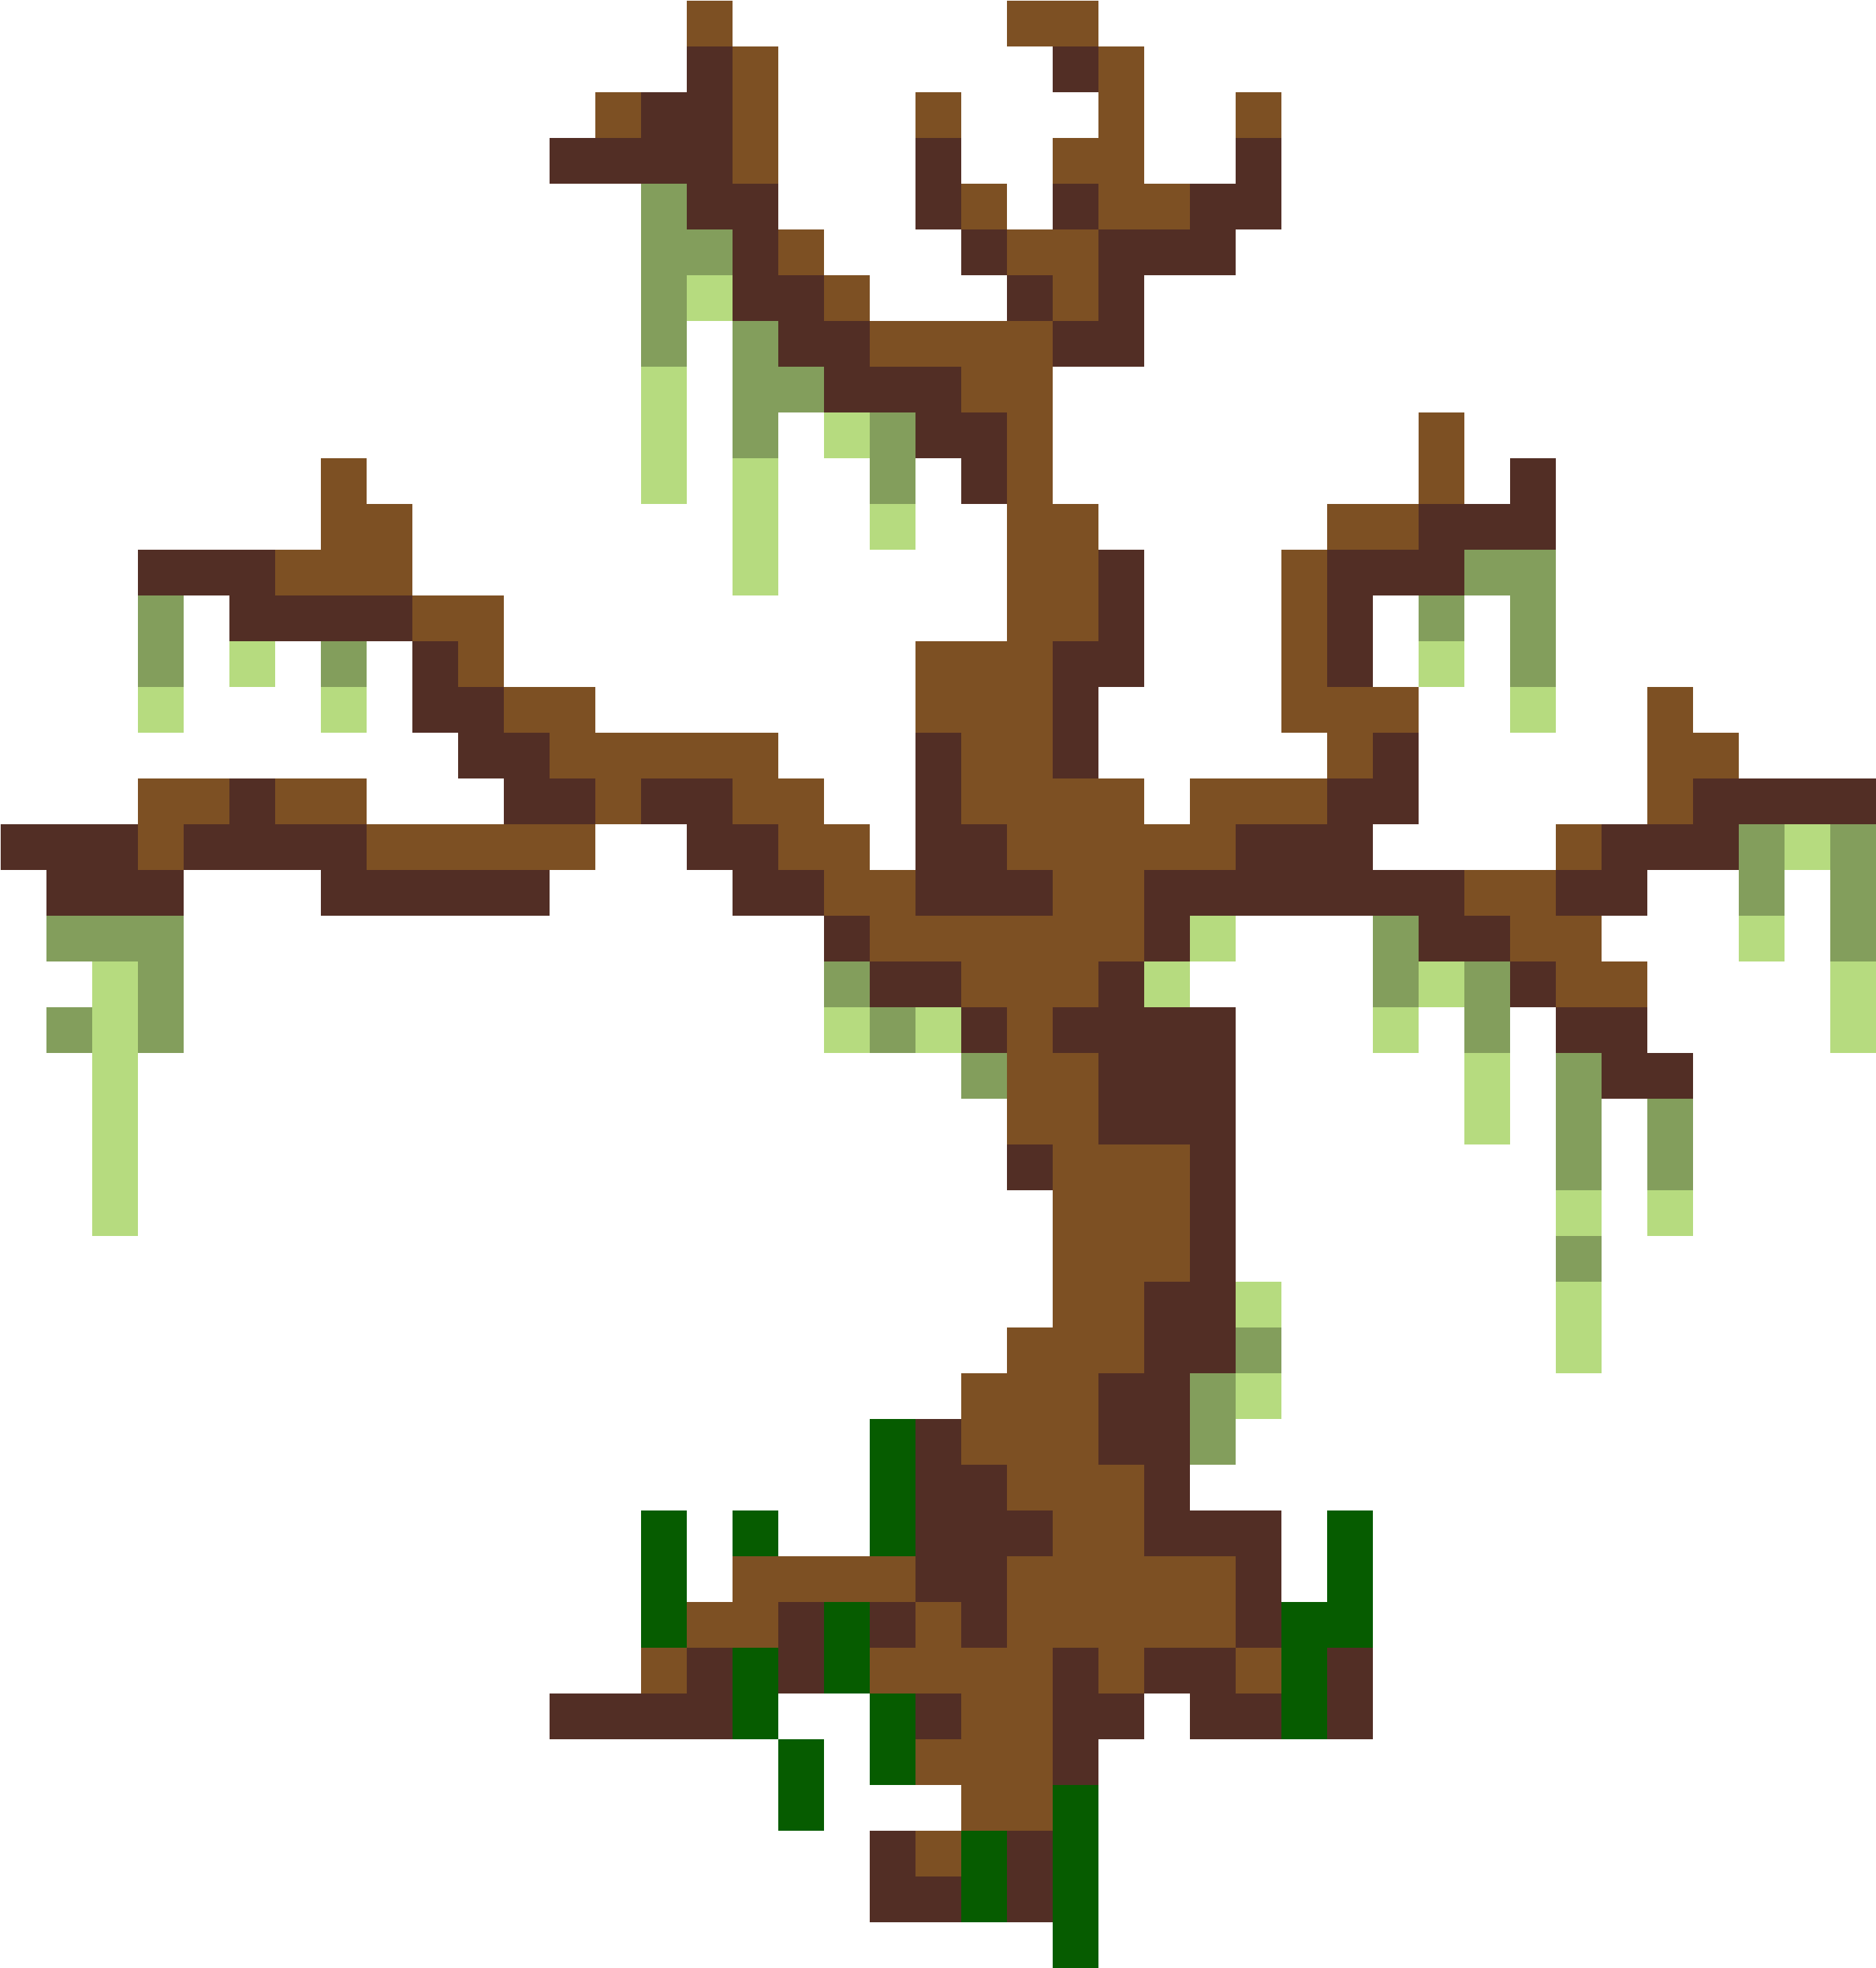 A Pixel Art Of A Tree